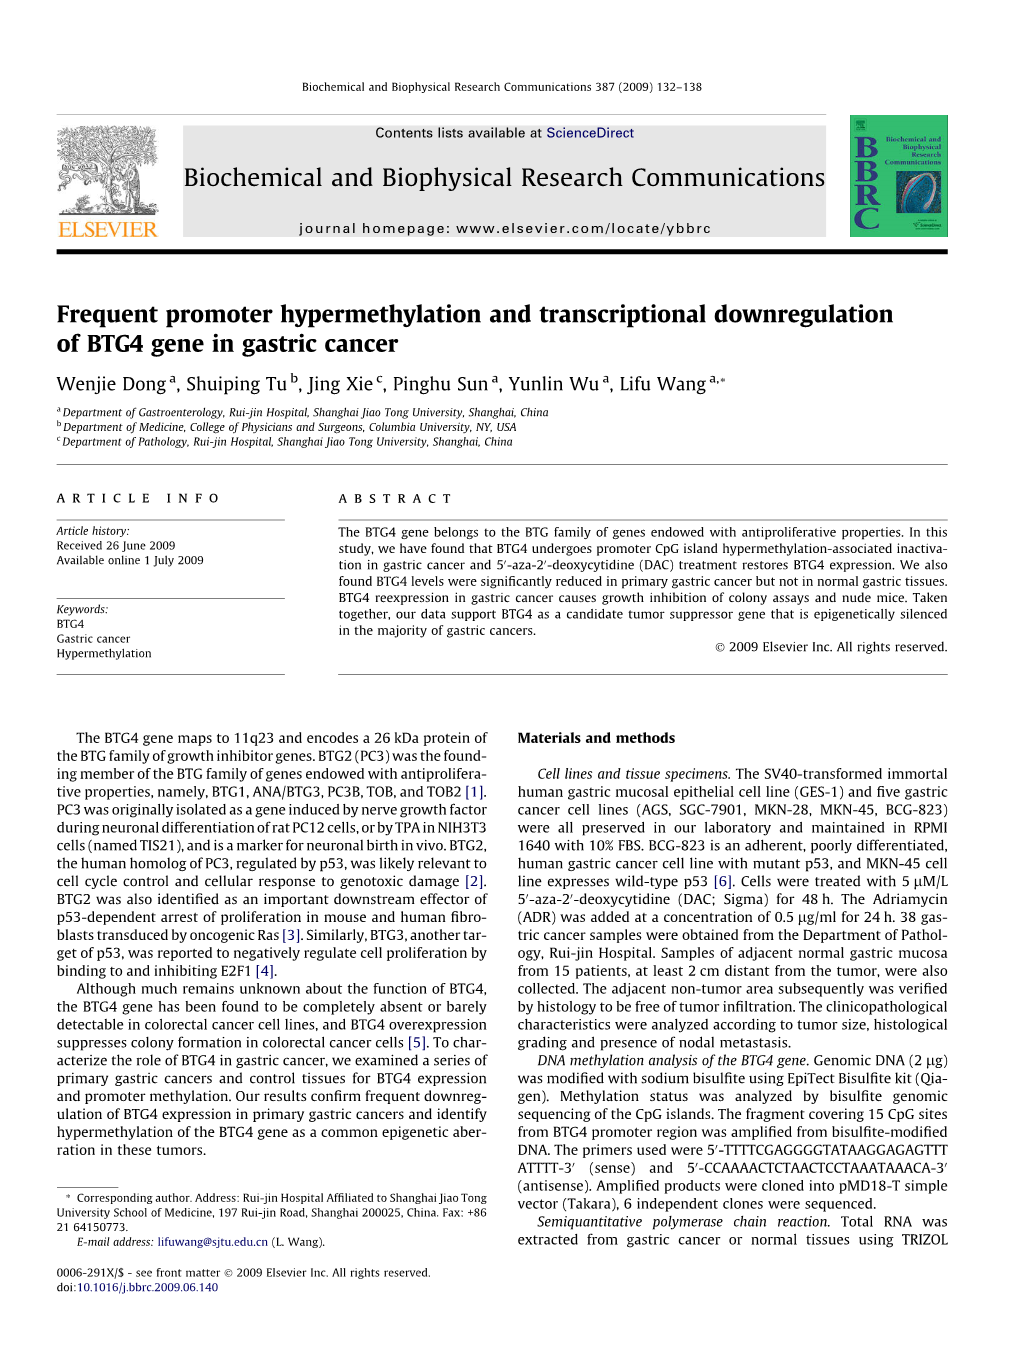 Frequent Promoter Hypermethylation and Transcriptional Downregulation of BTG4 Gene in Gastric Cancer